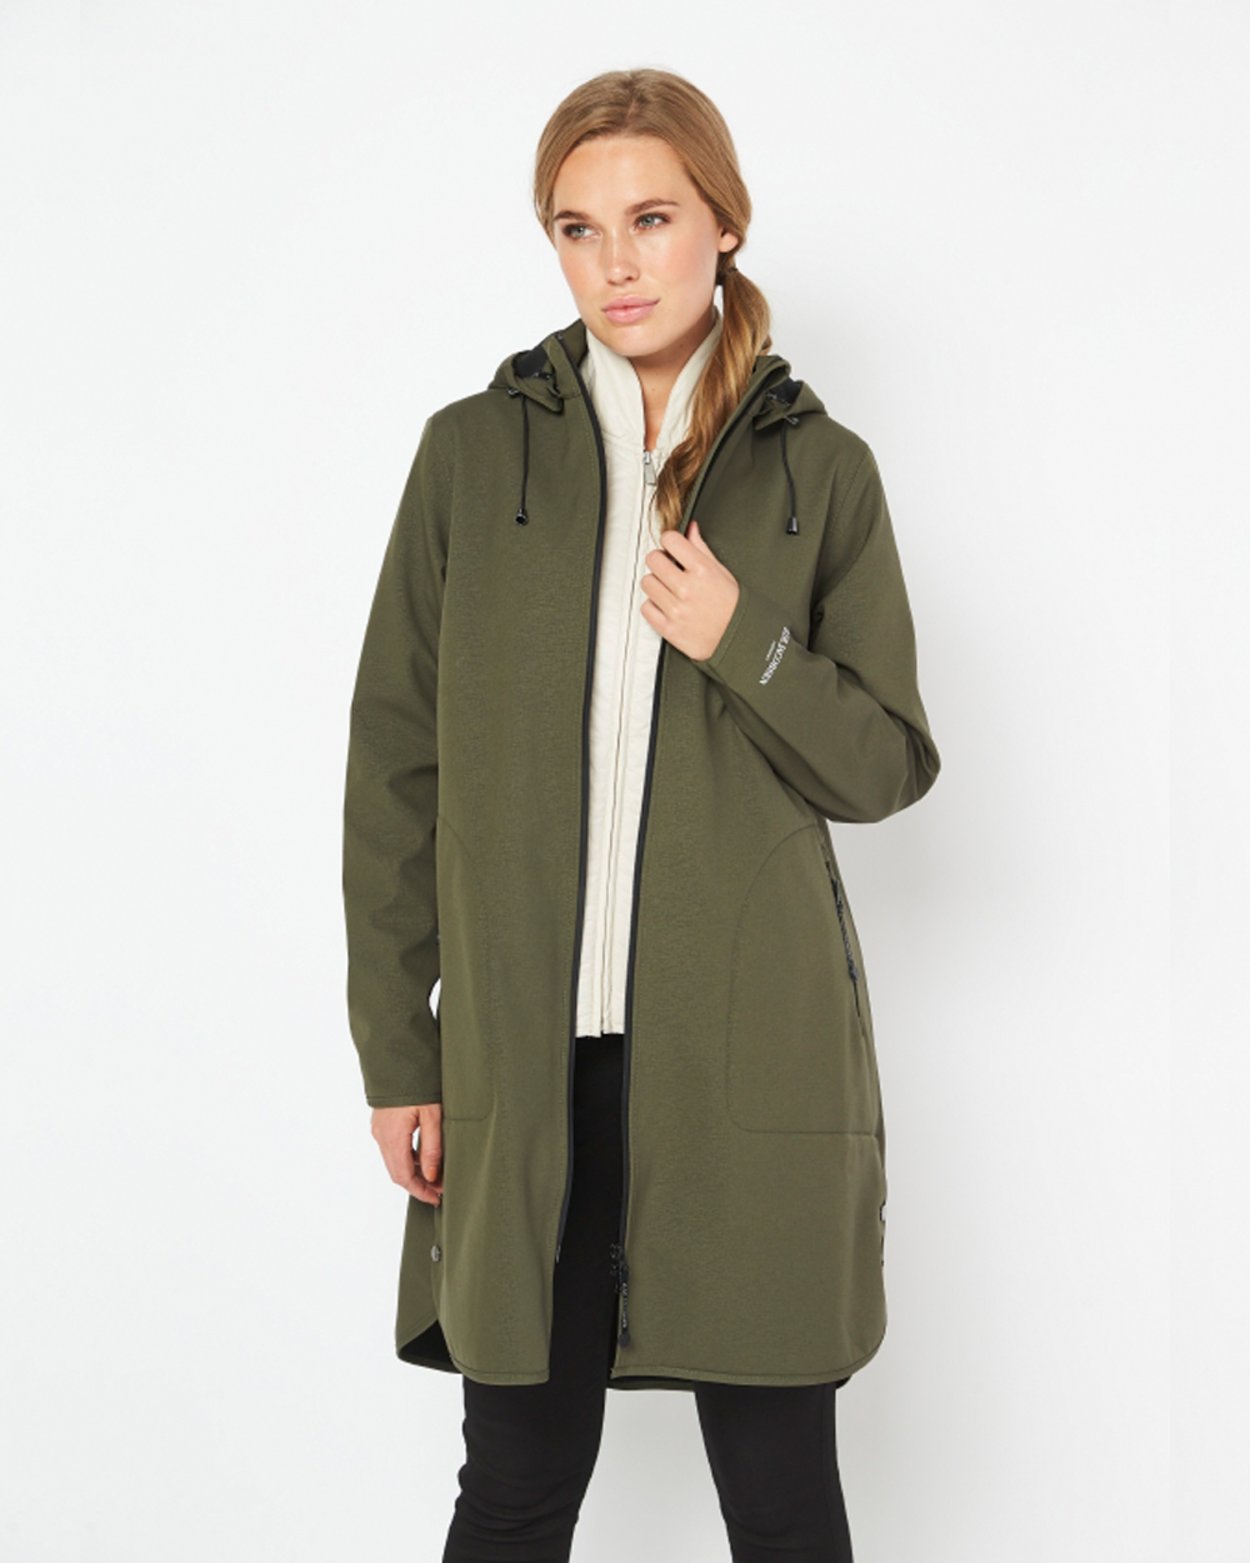 A-line Soft Shell Raincoat | Outerwear by Ilse Jacobsen Hornbæk | Avoca ...